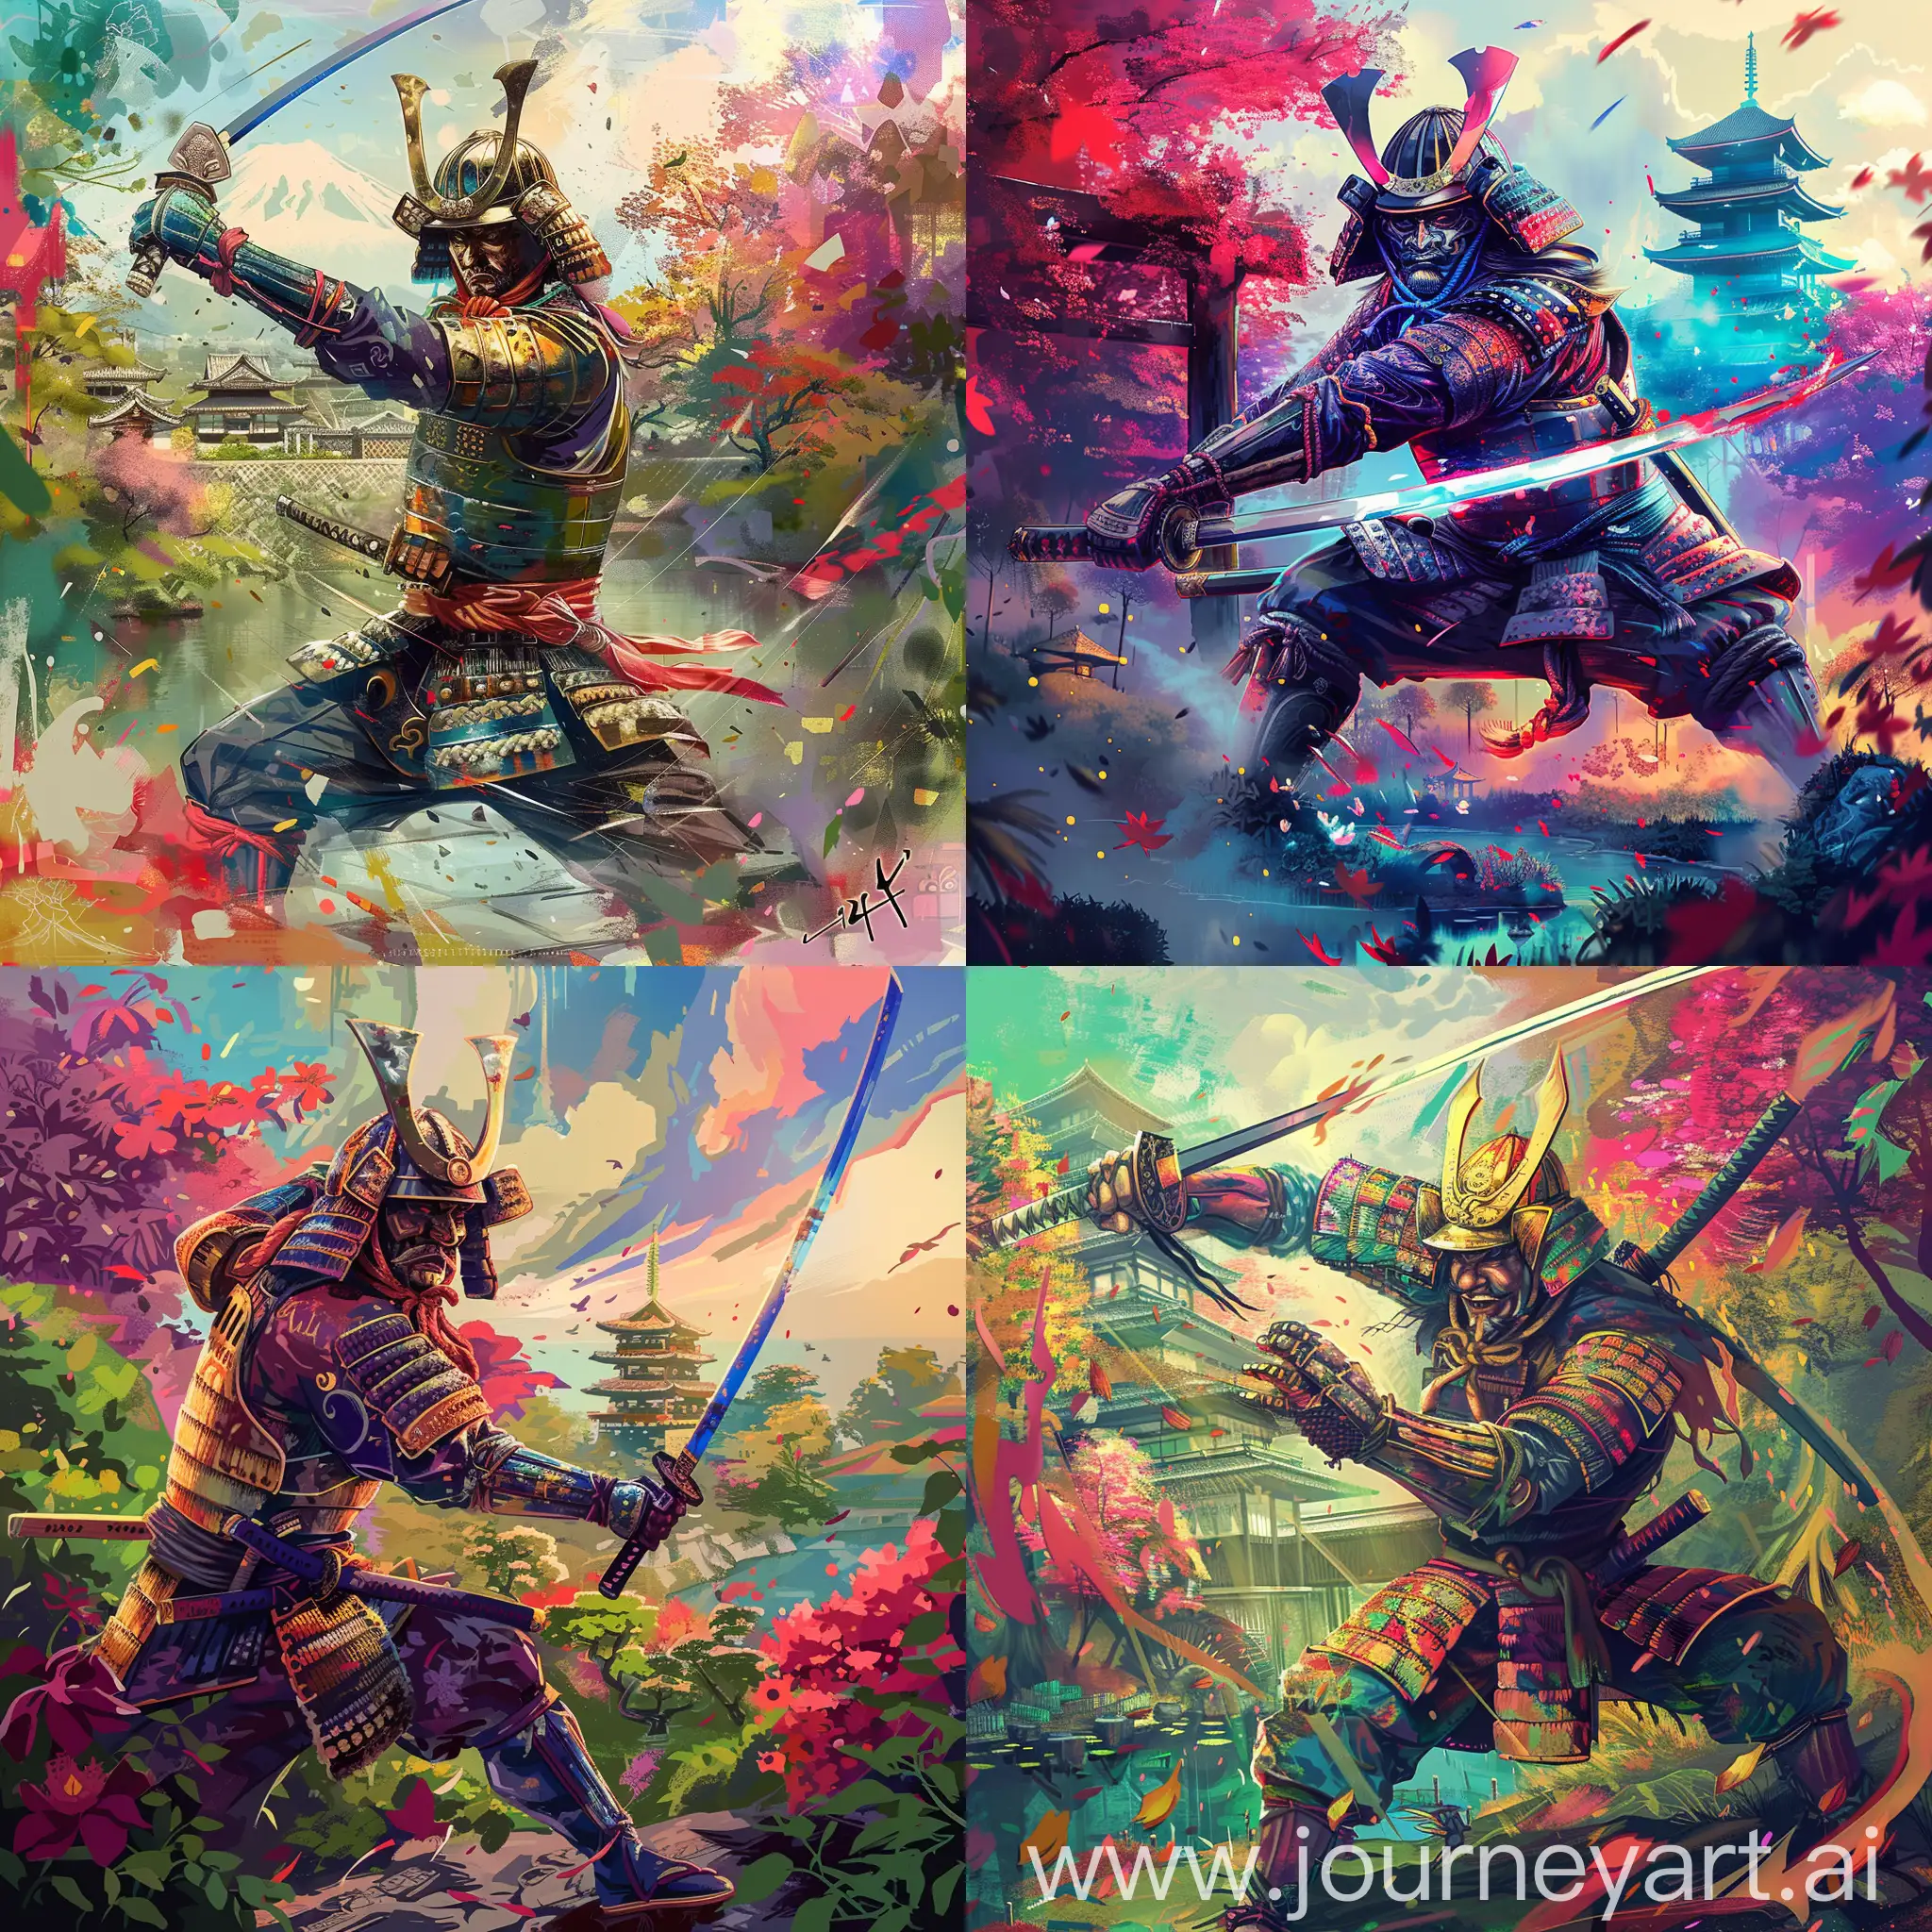 Illustration of prideful samurai, in samurai armor and helmet, slashing his sword, japanese garden background, colorful tones, surreal art, epic